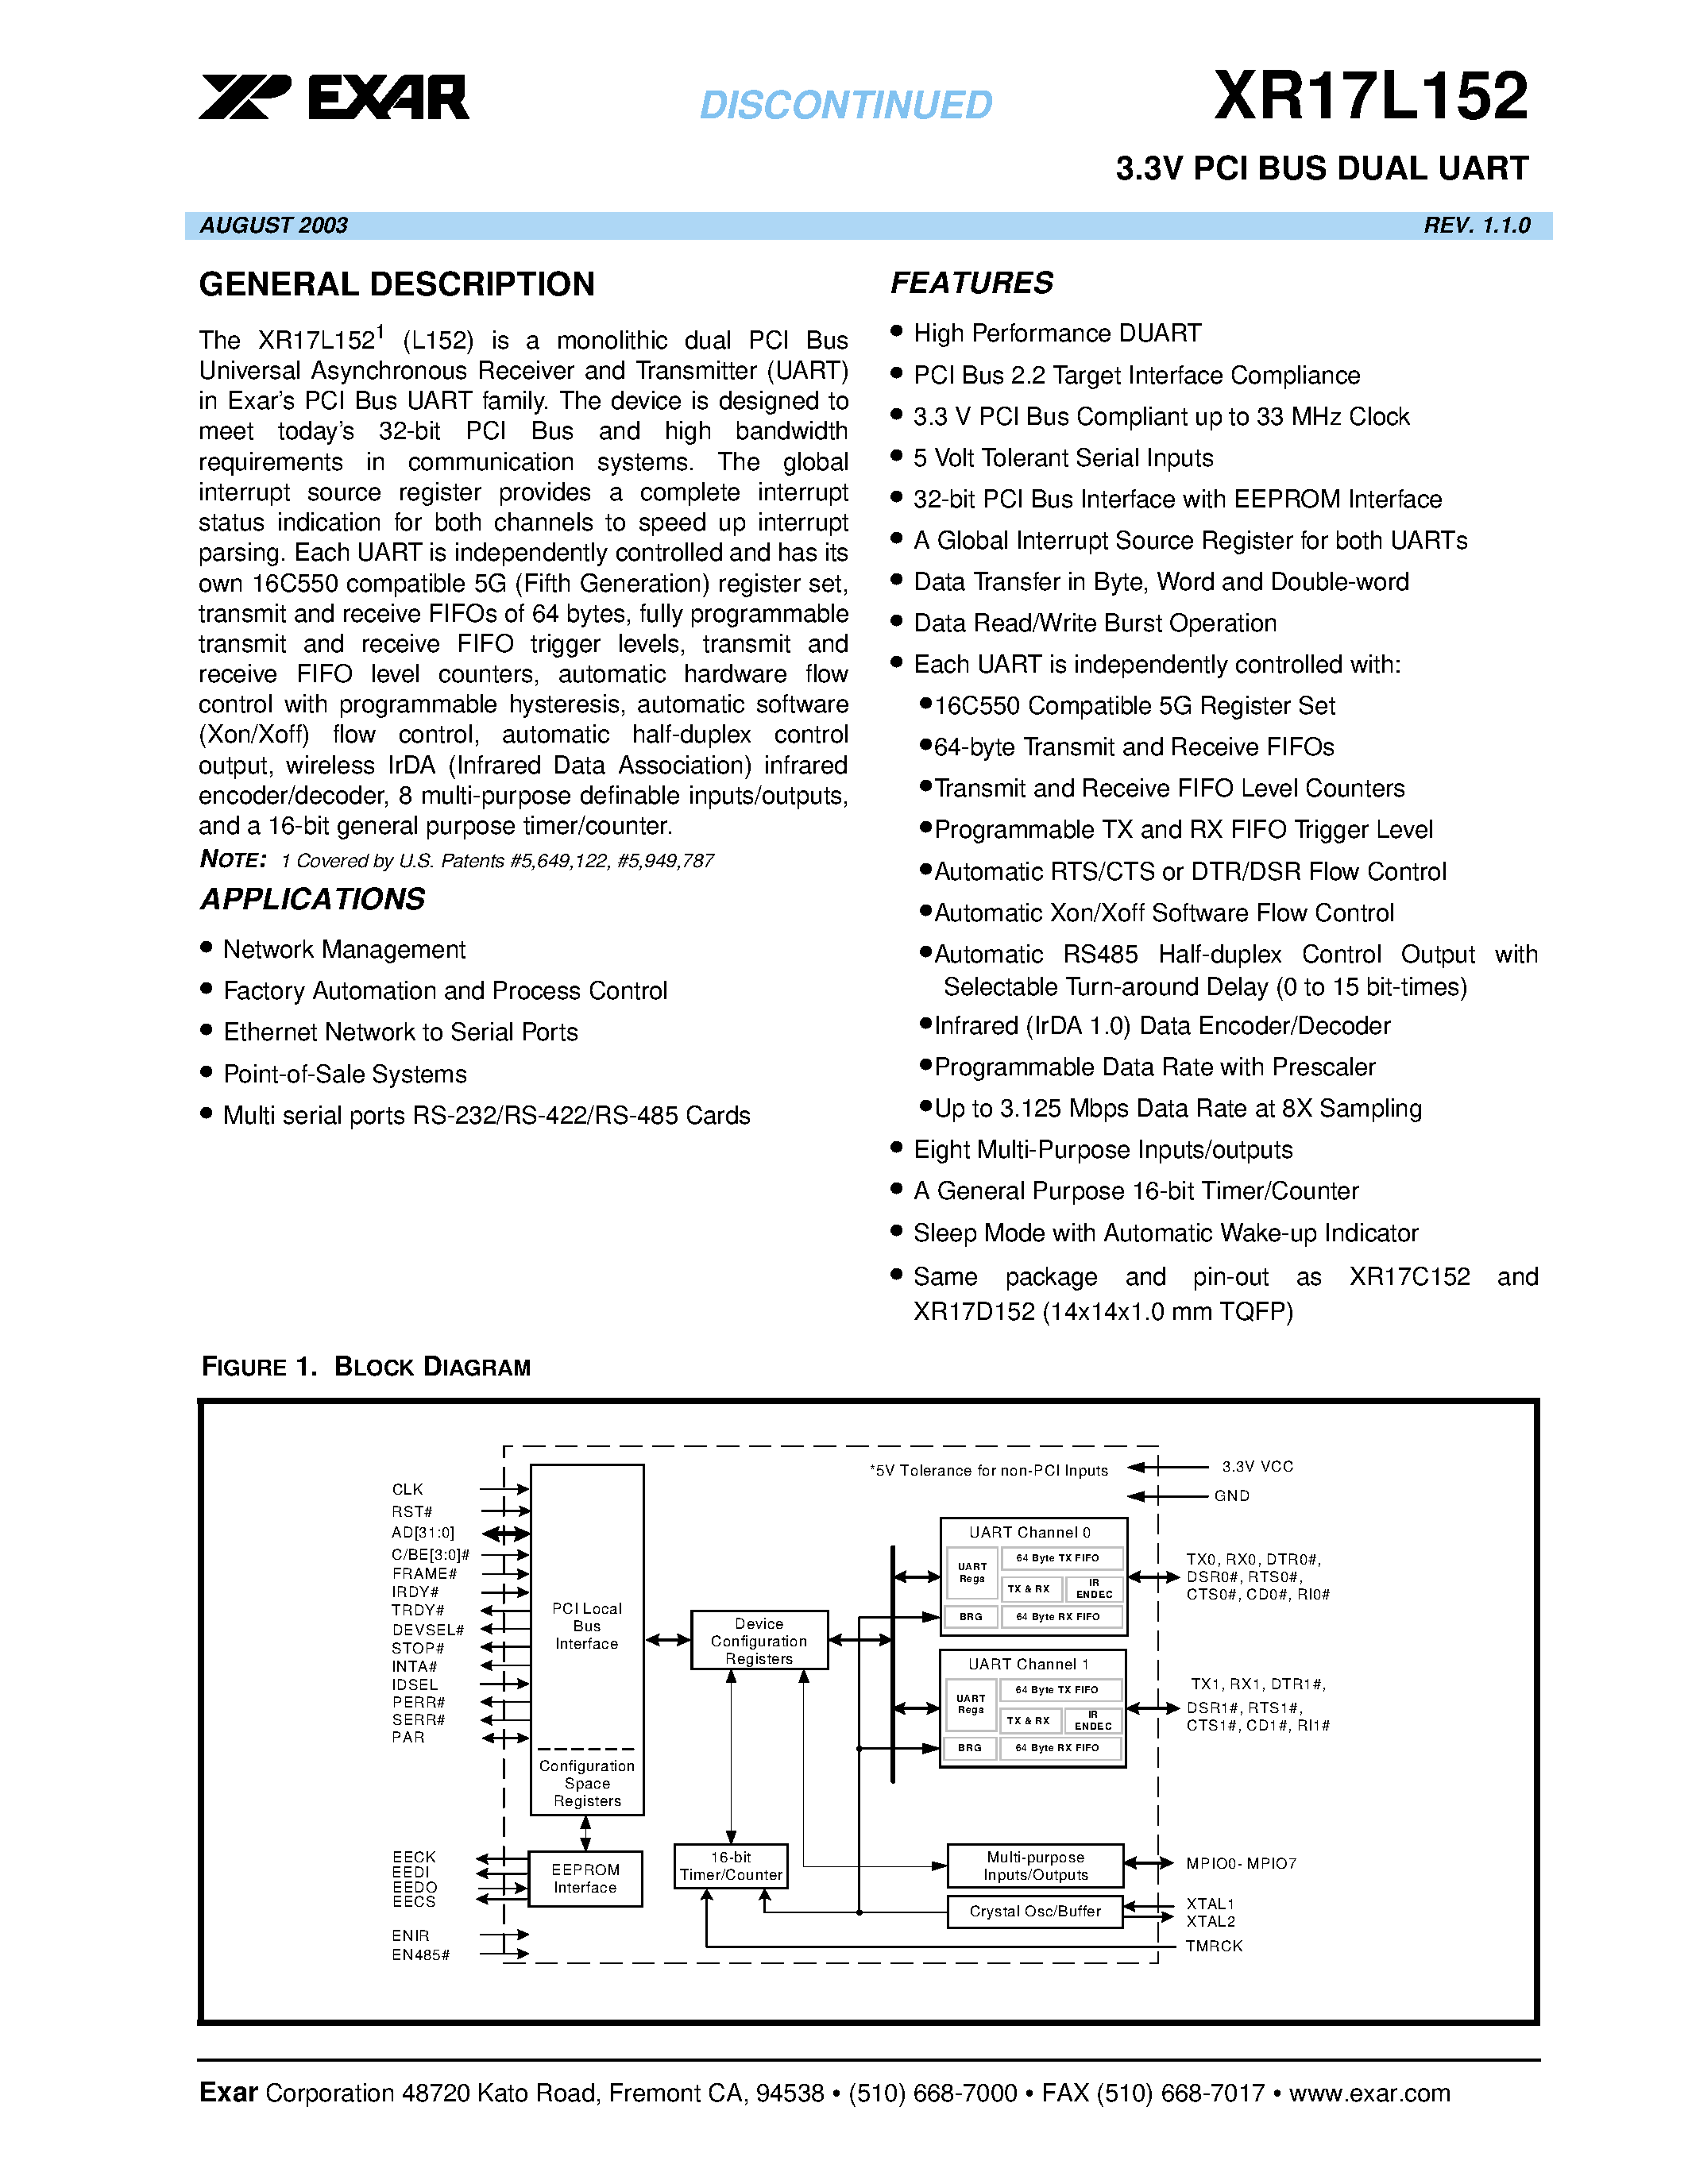 Datasheet XR17L152 - 3.3V PCI BUS DUAL UART page 1